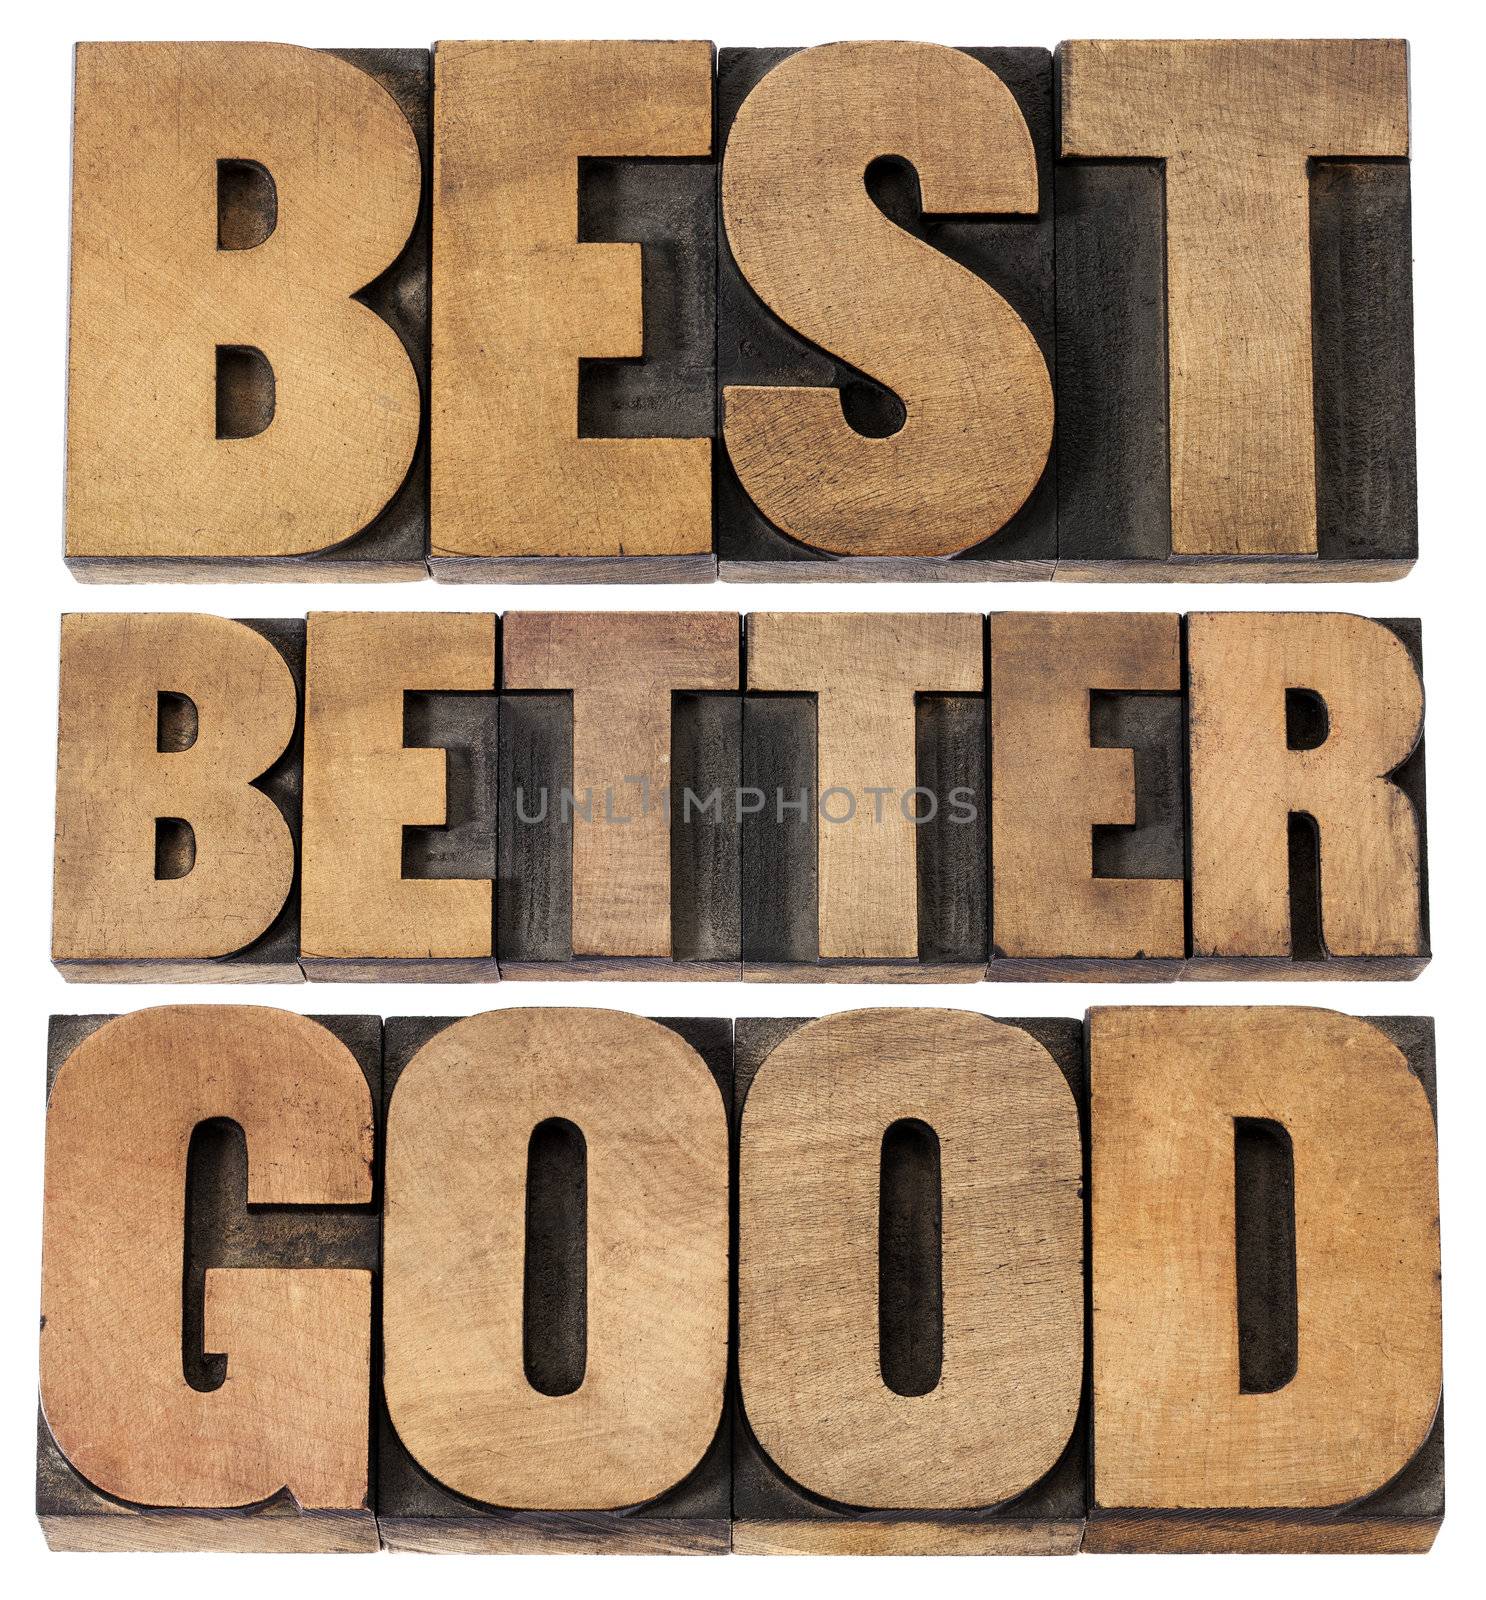 good, better, best typography by PixelsAway